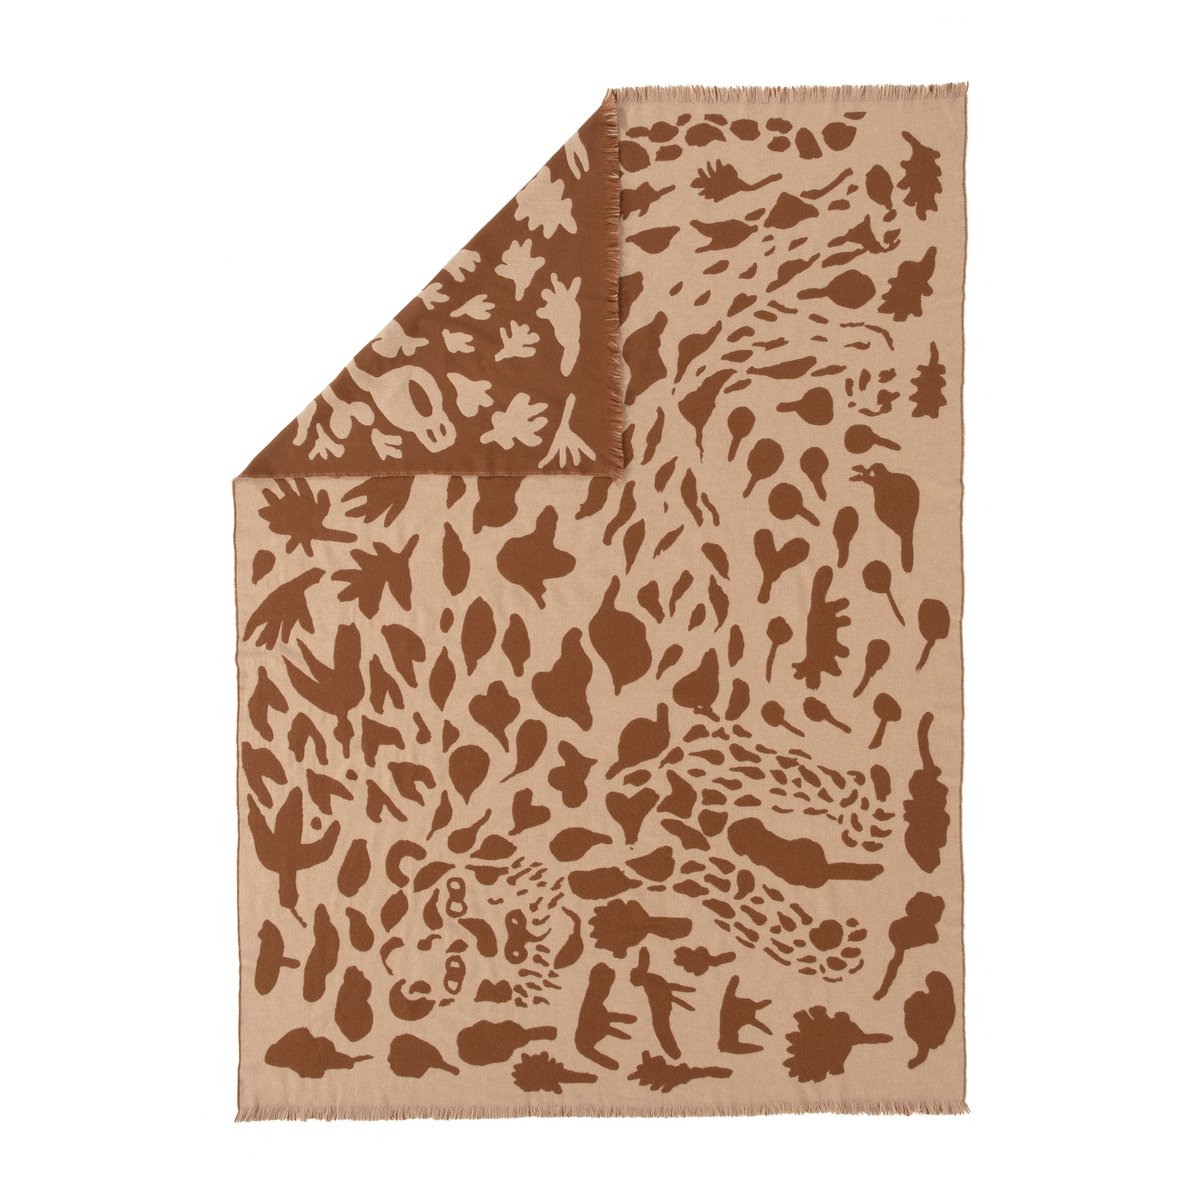 Iittala Oiva Toikka Cheetah uldplaid 130×180 cm Brun